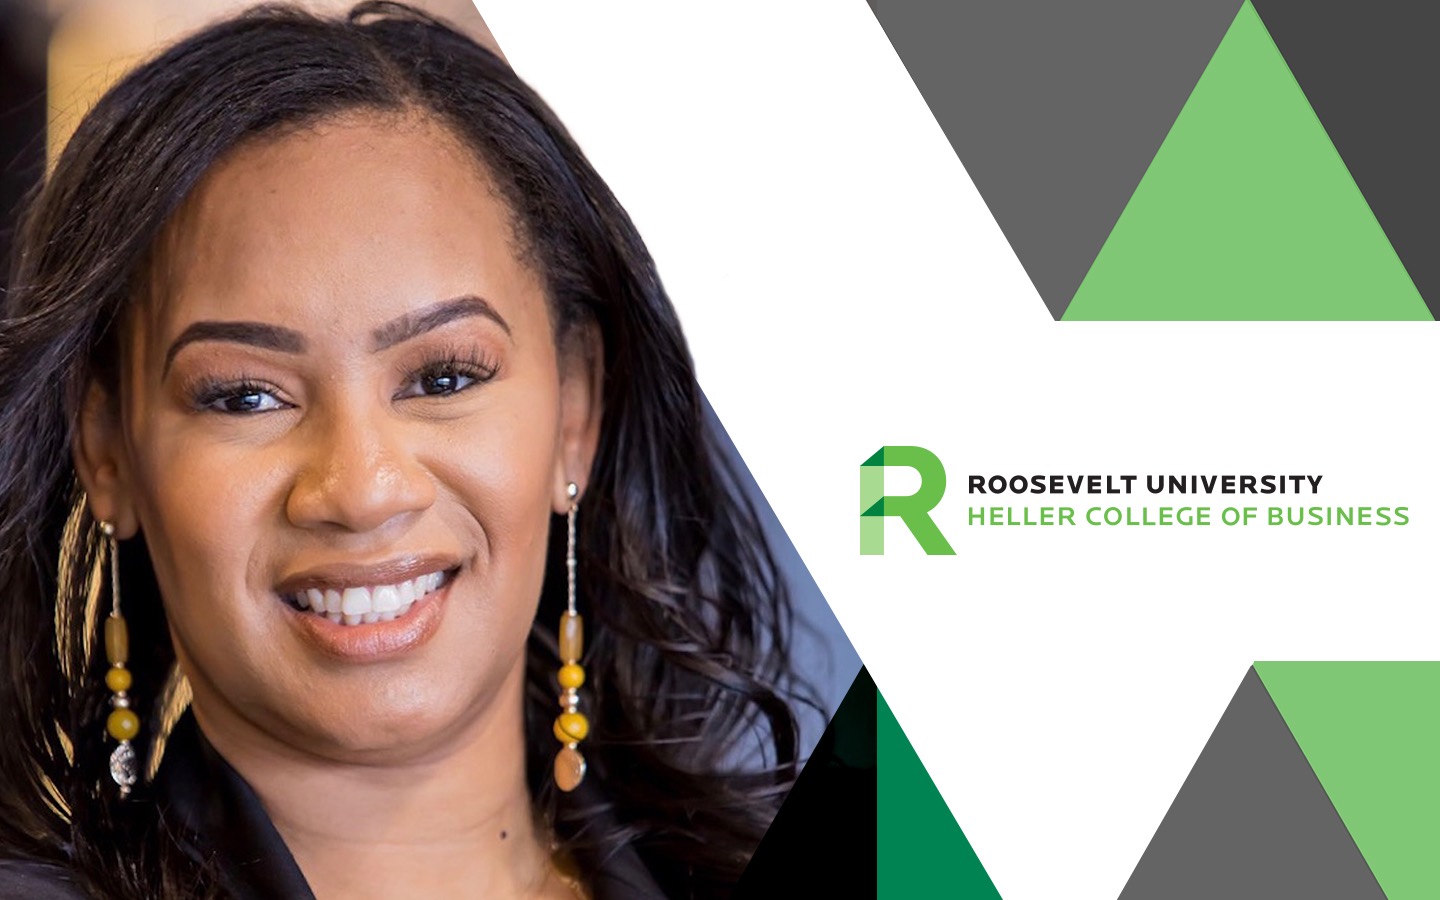 Roosevelt University human resources alum Nicole Rhone